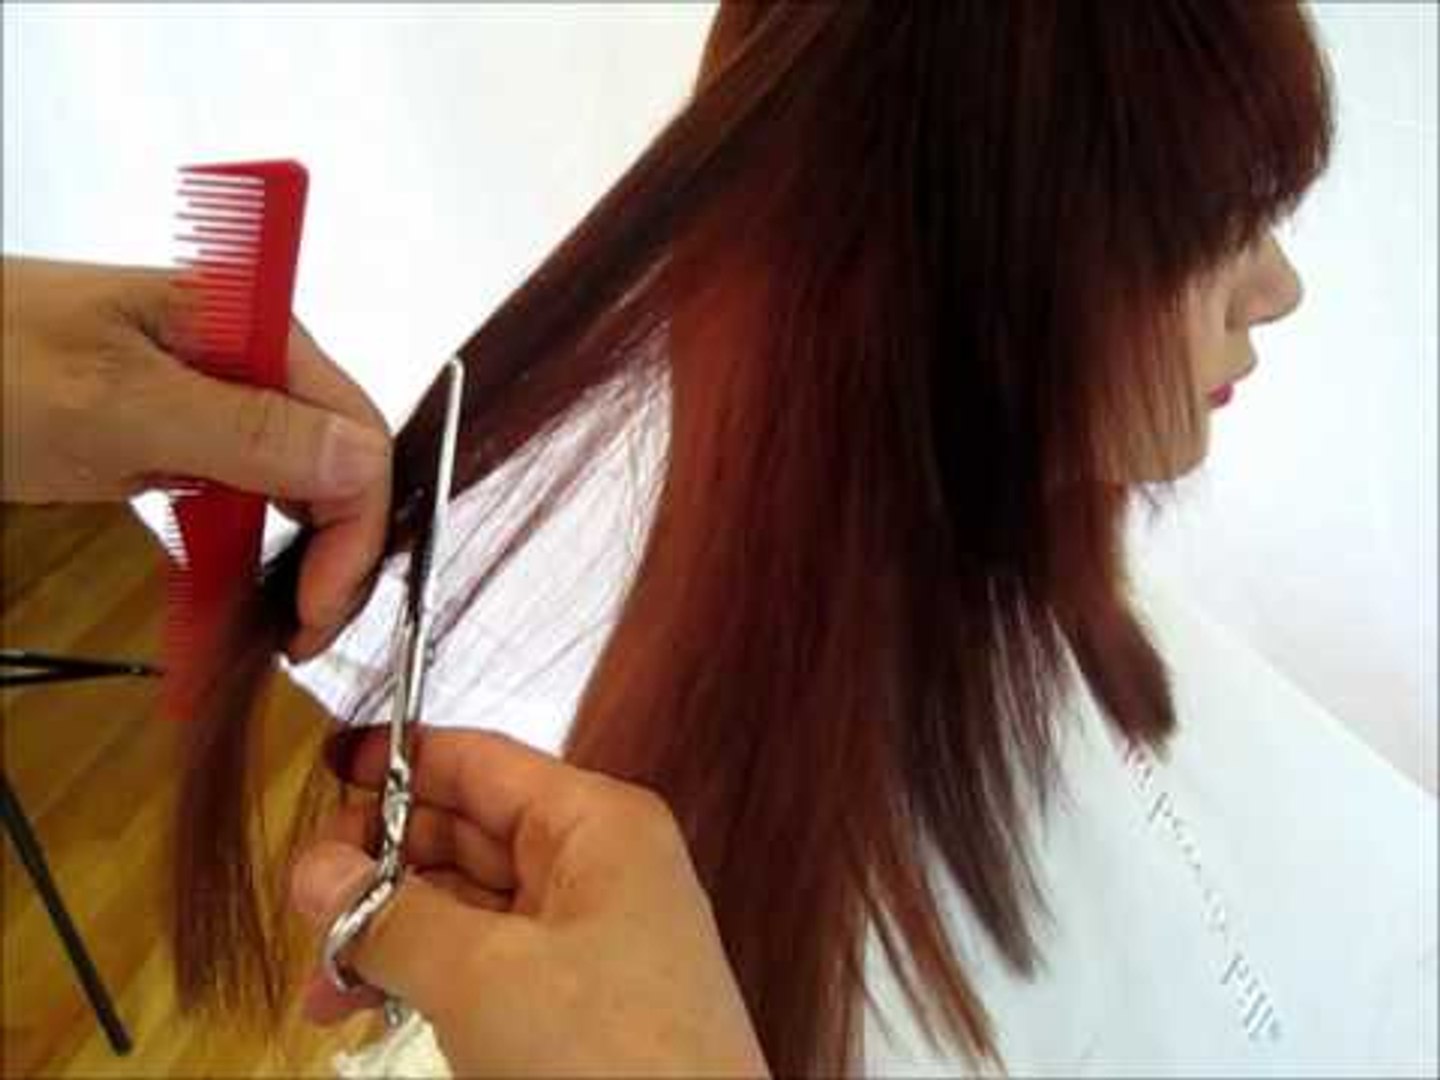 hair cutting videos for women in india hair cut - video Dailymotion